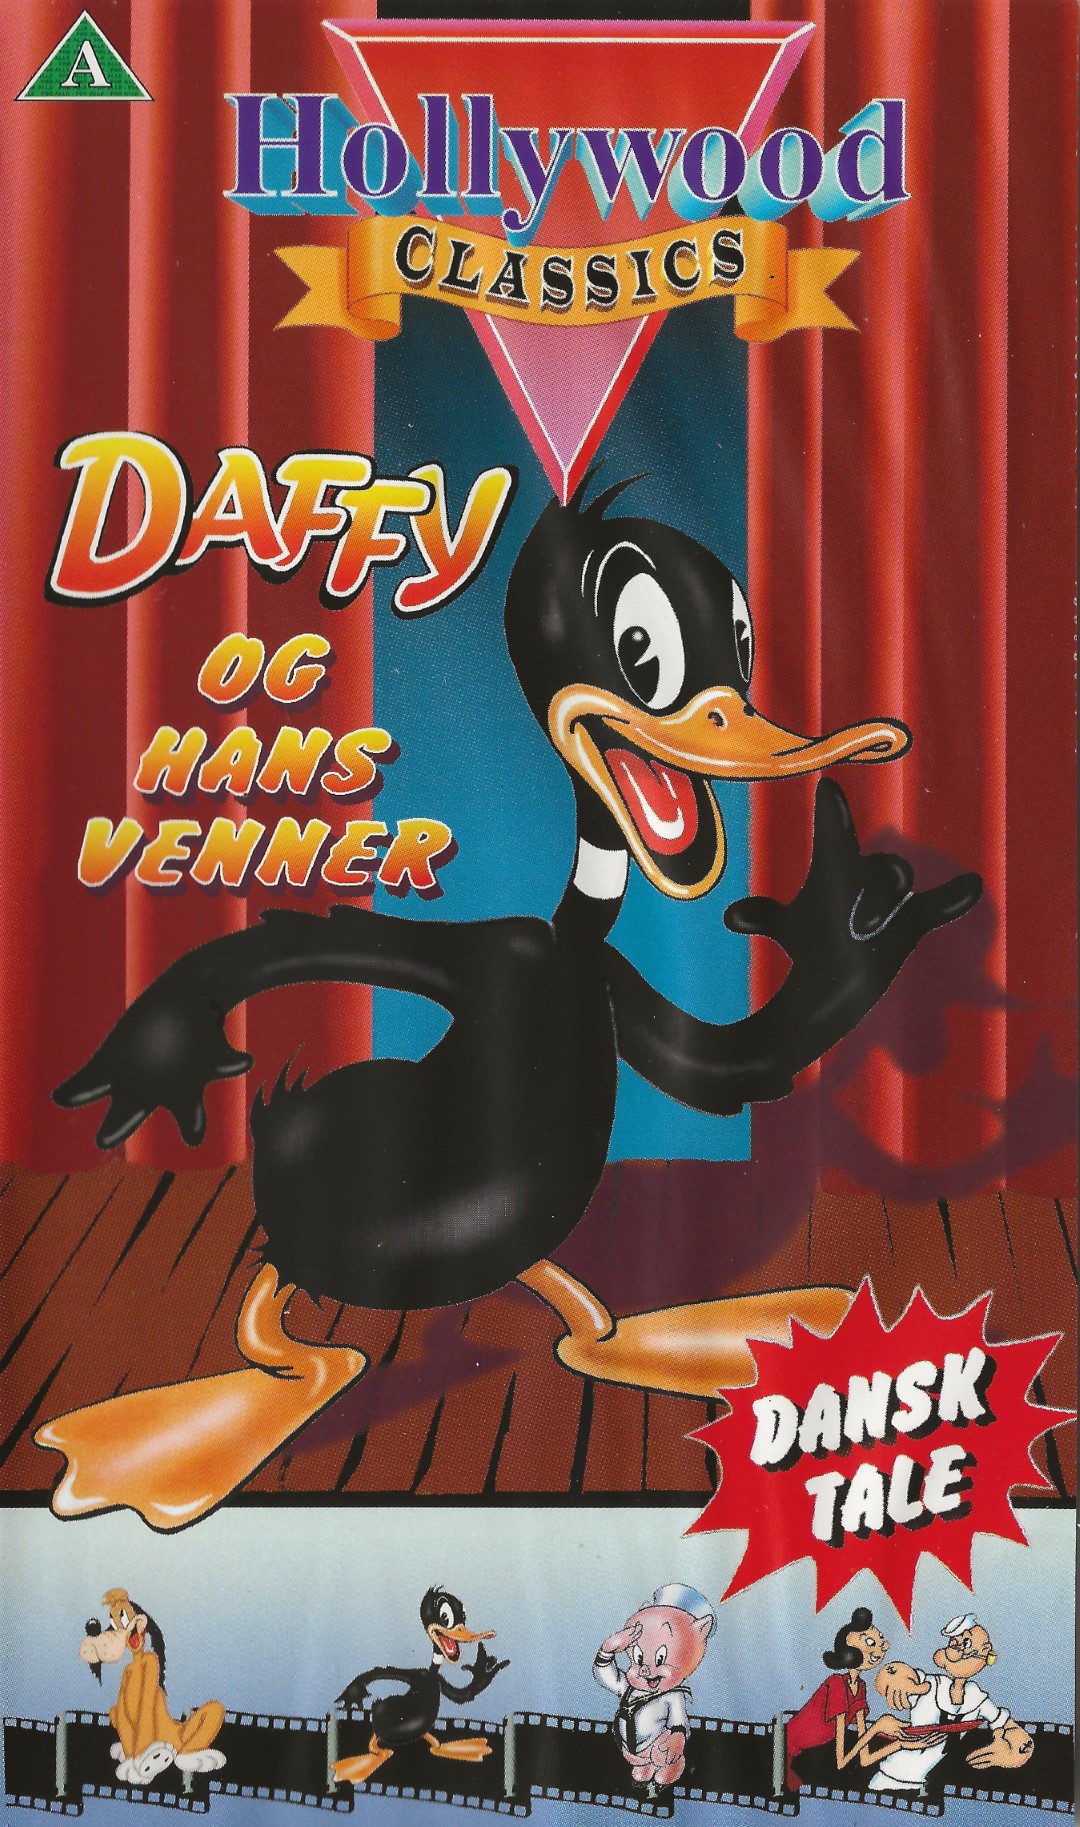 Daffy og hans venner <p>Org.titel: Hollywood Classics nr. 1</p> VHS Hollywood Classics 0